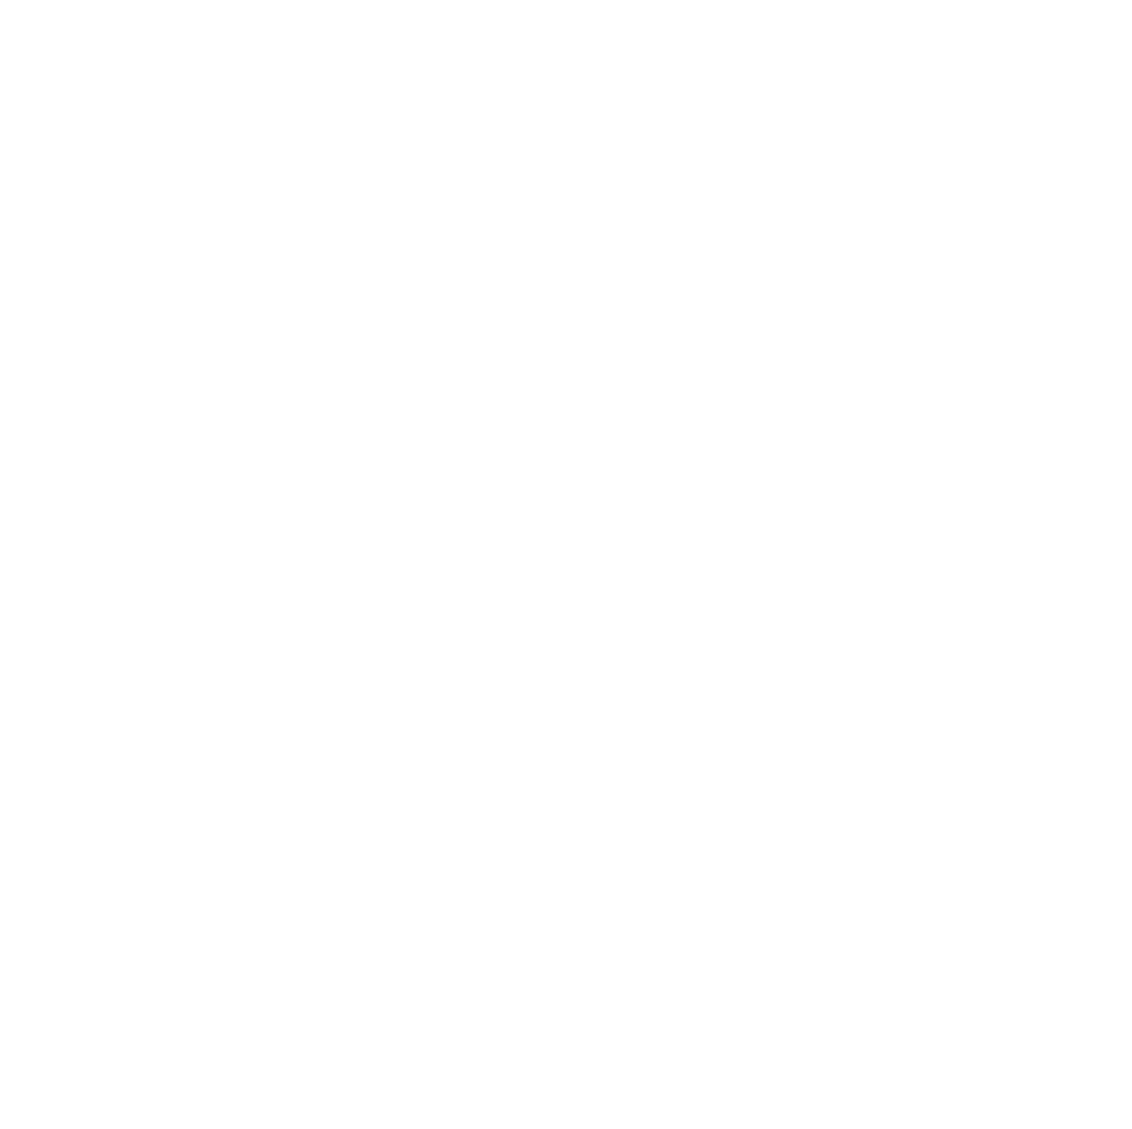 63 2 717 - Linkedin Logo Png White (1181x1181)